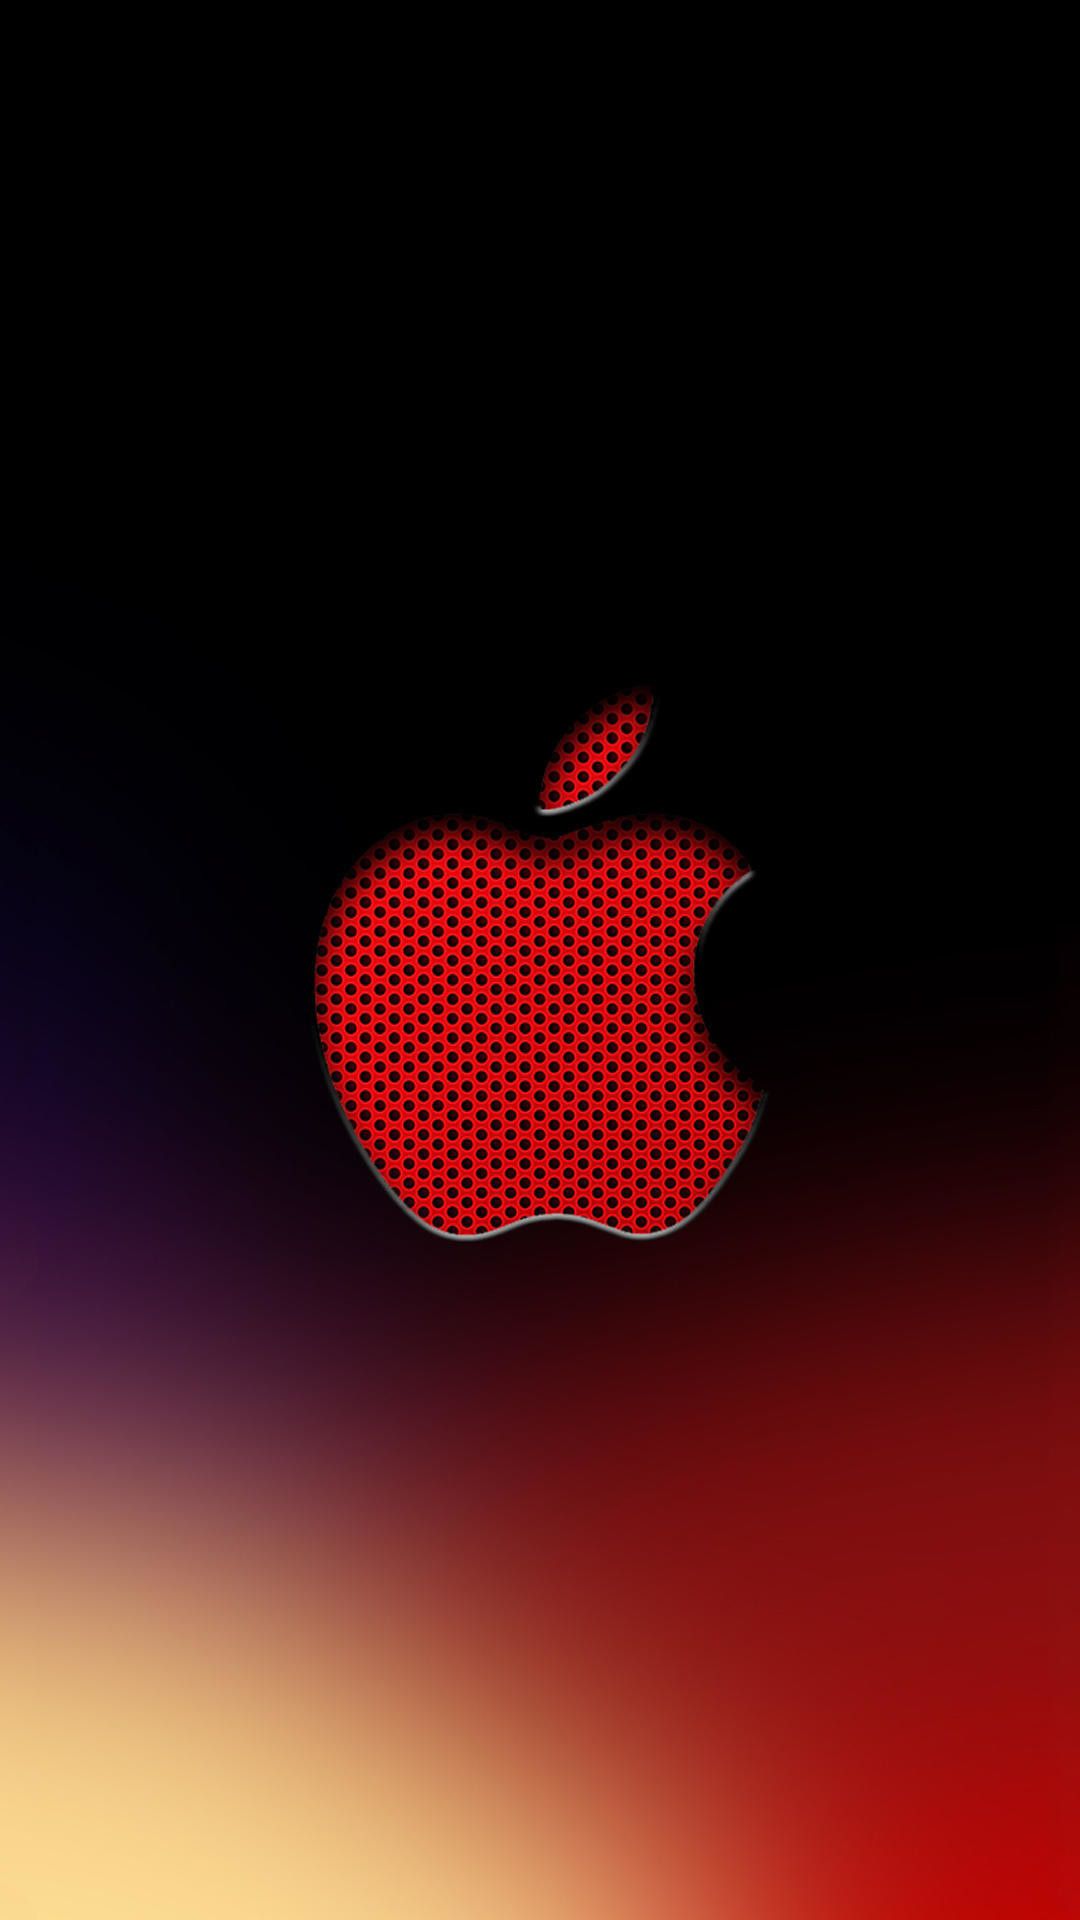 iPhone 7 Plus Apple Wallpaper